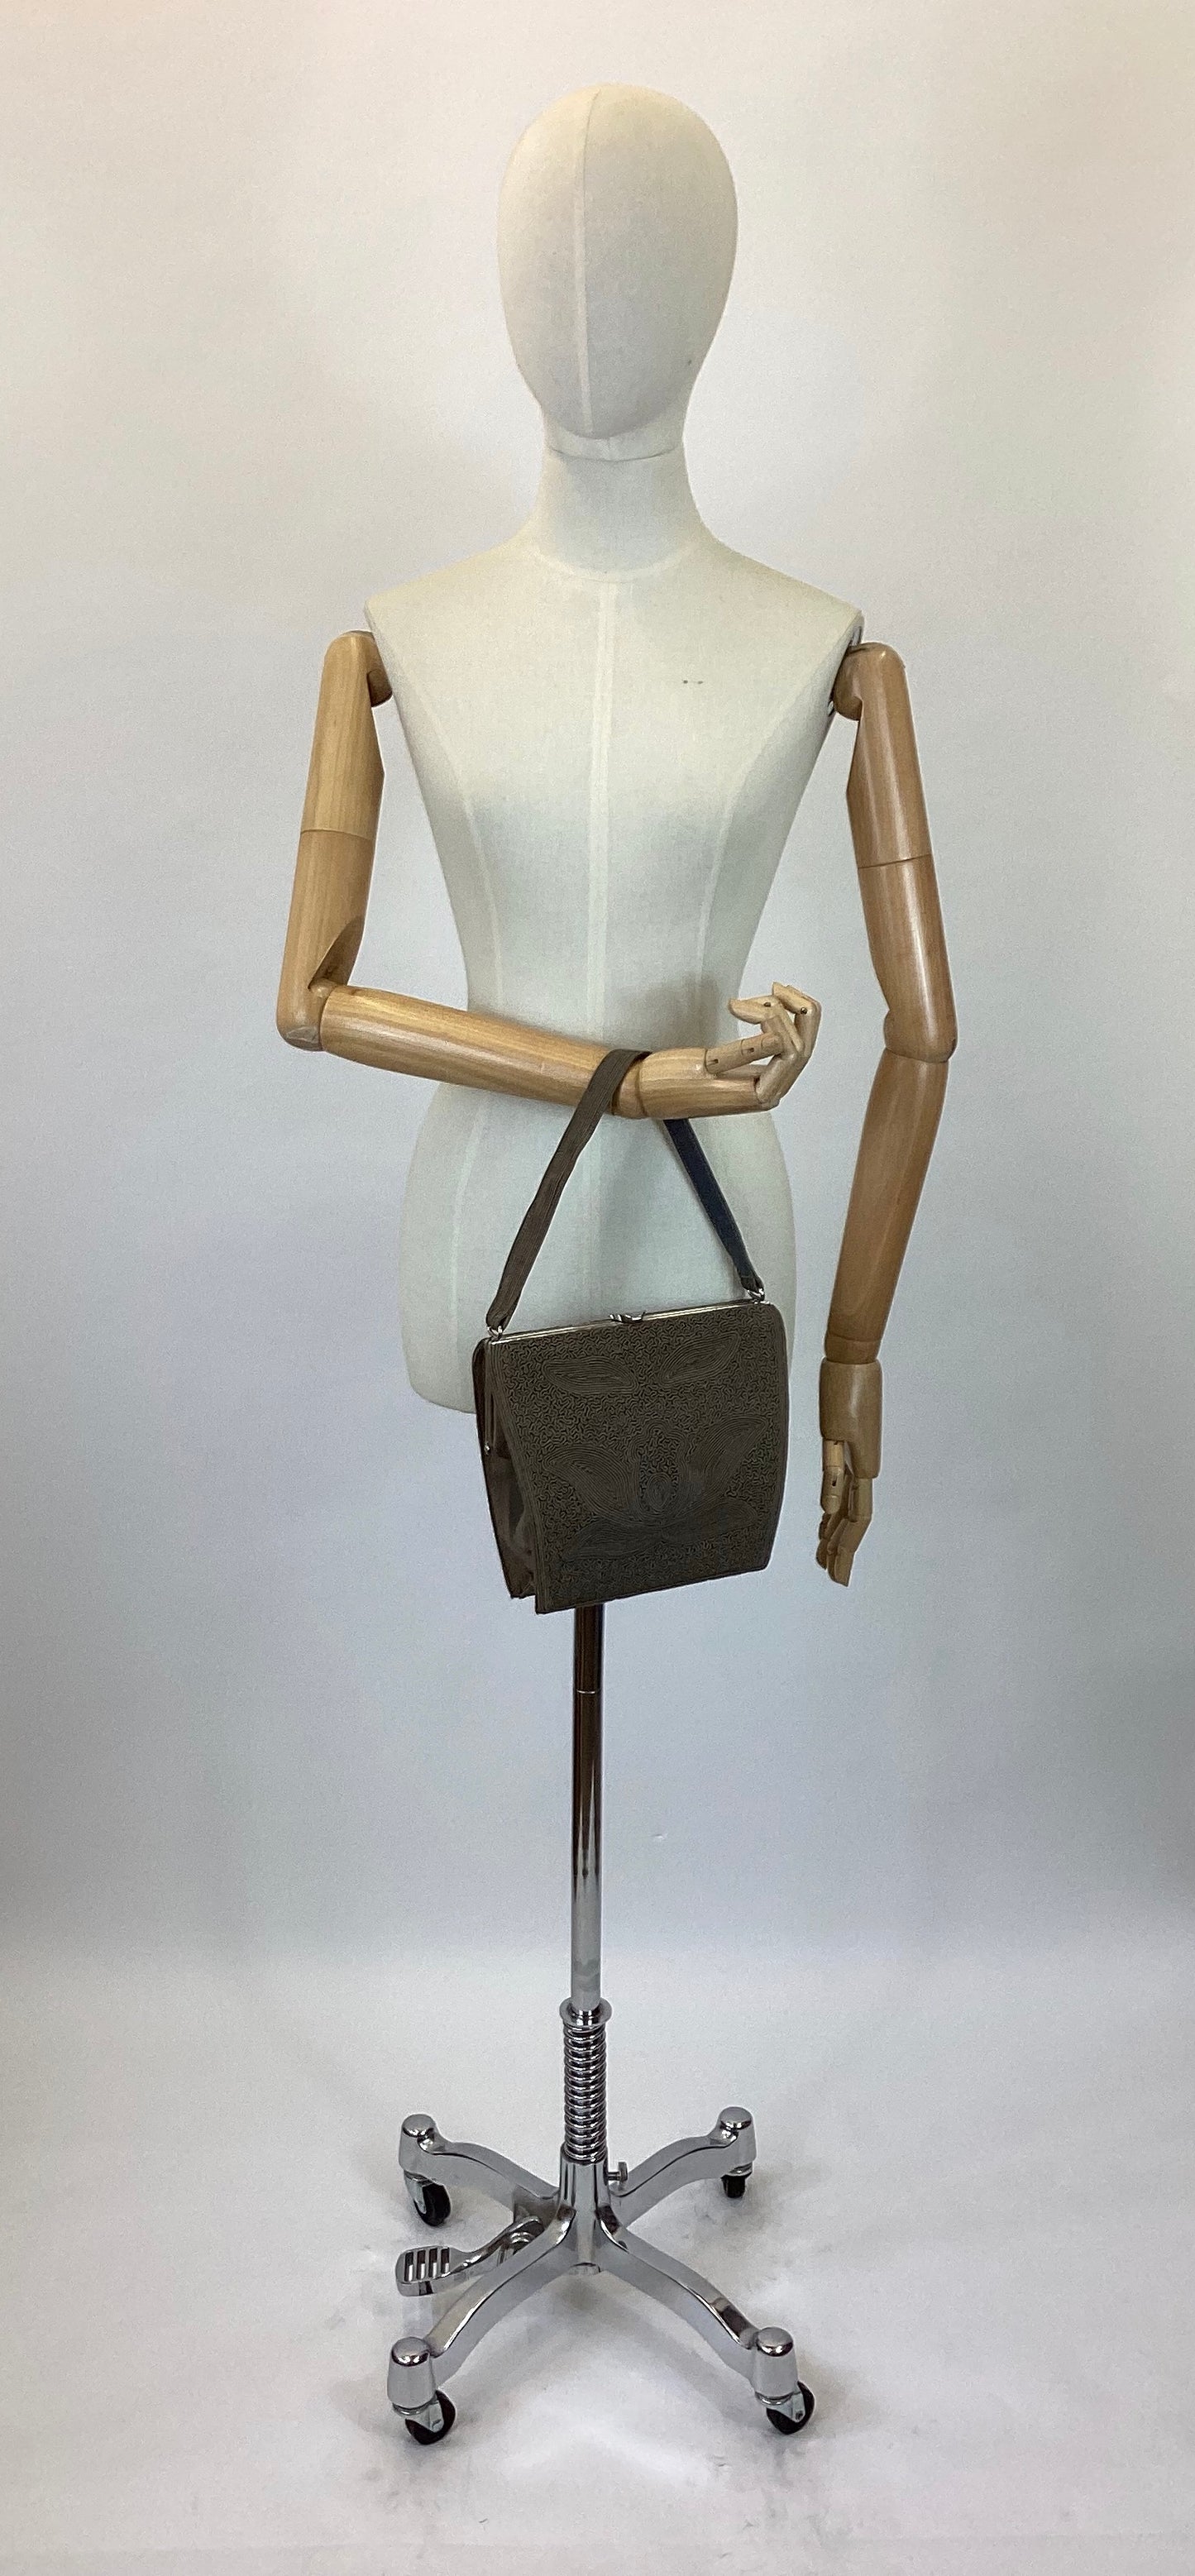 Original 40’s Fabulous shaped Corde Handbag - lighter brown / grey tone.